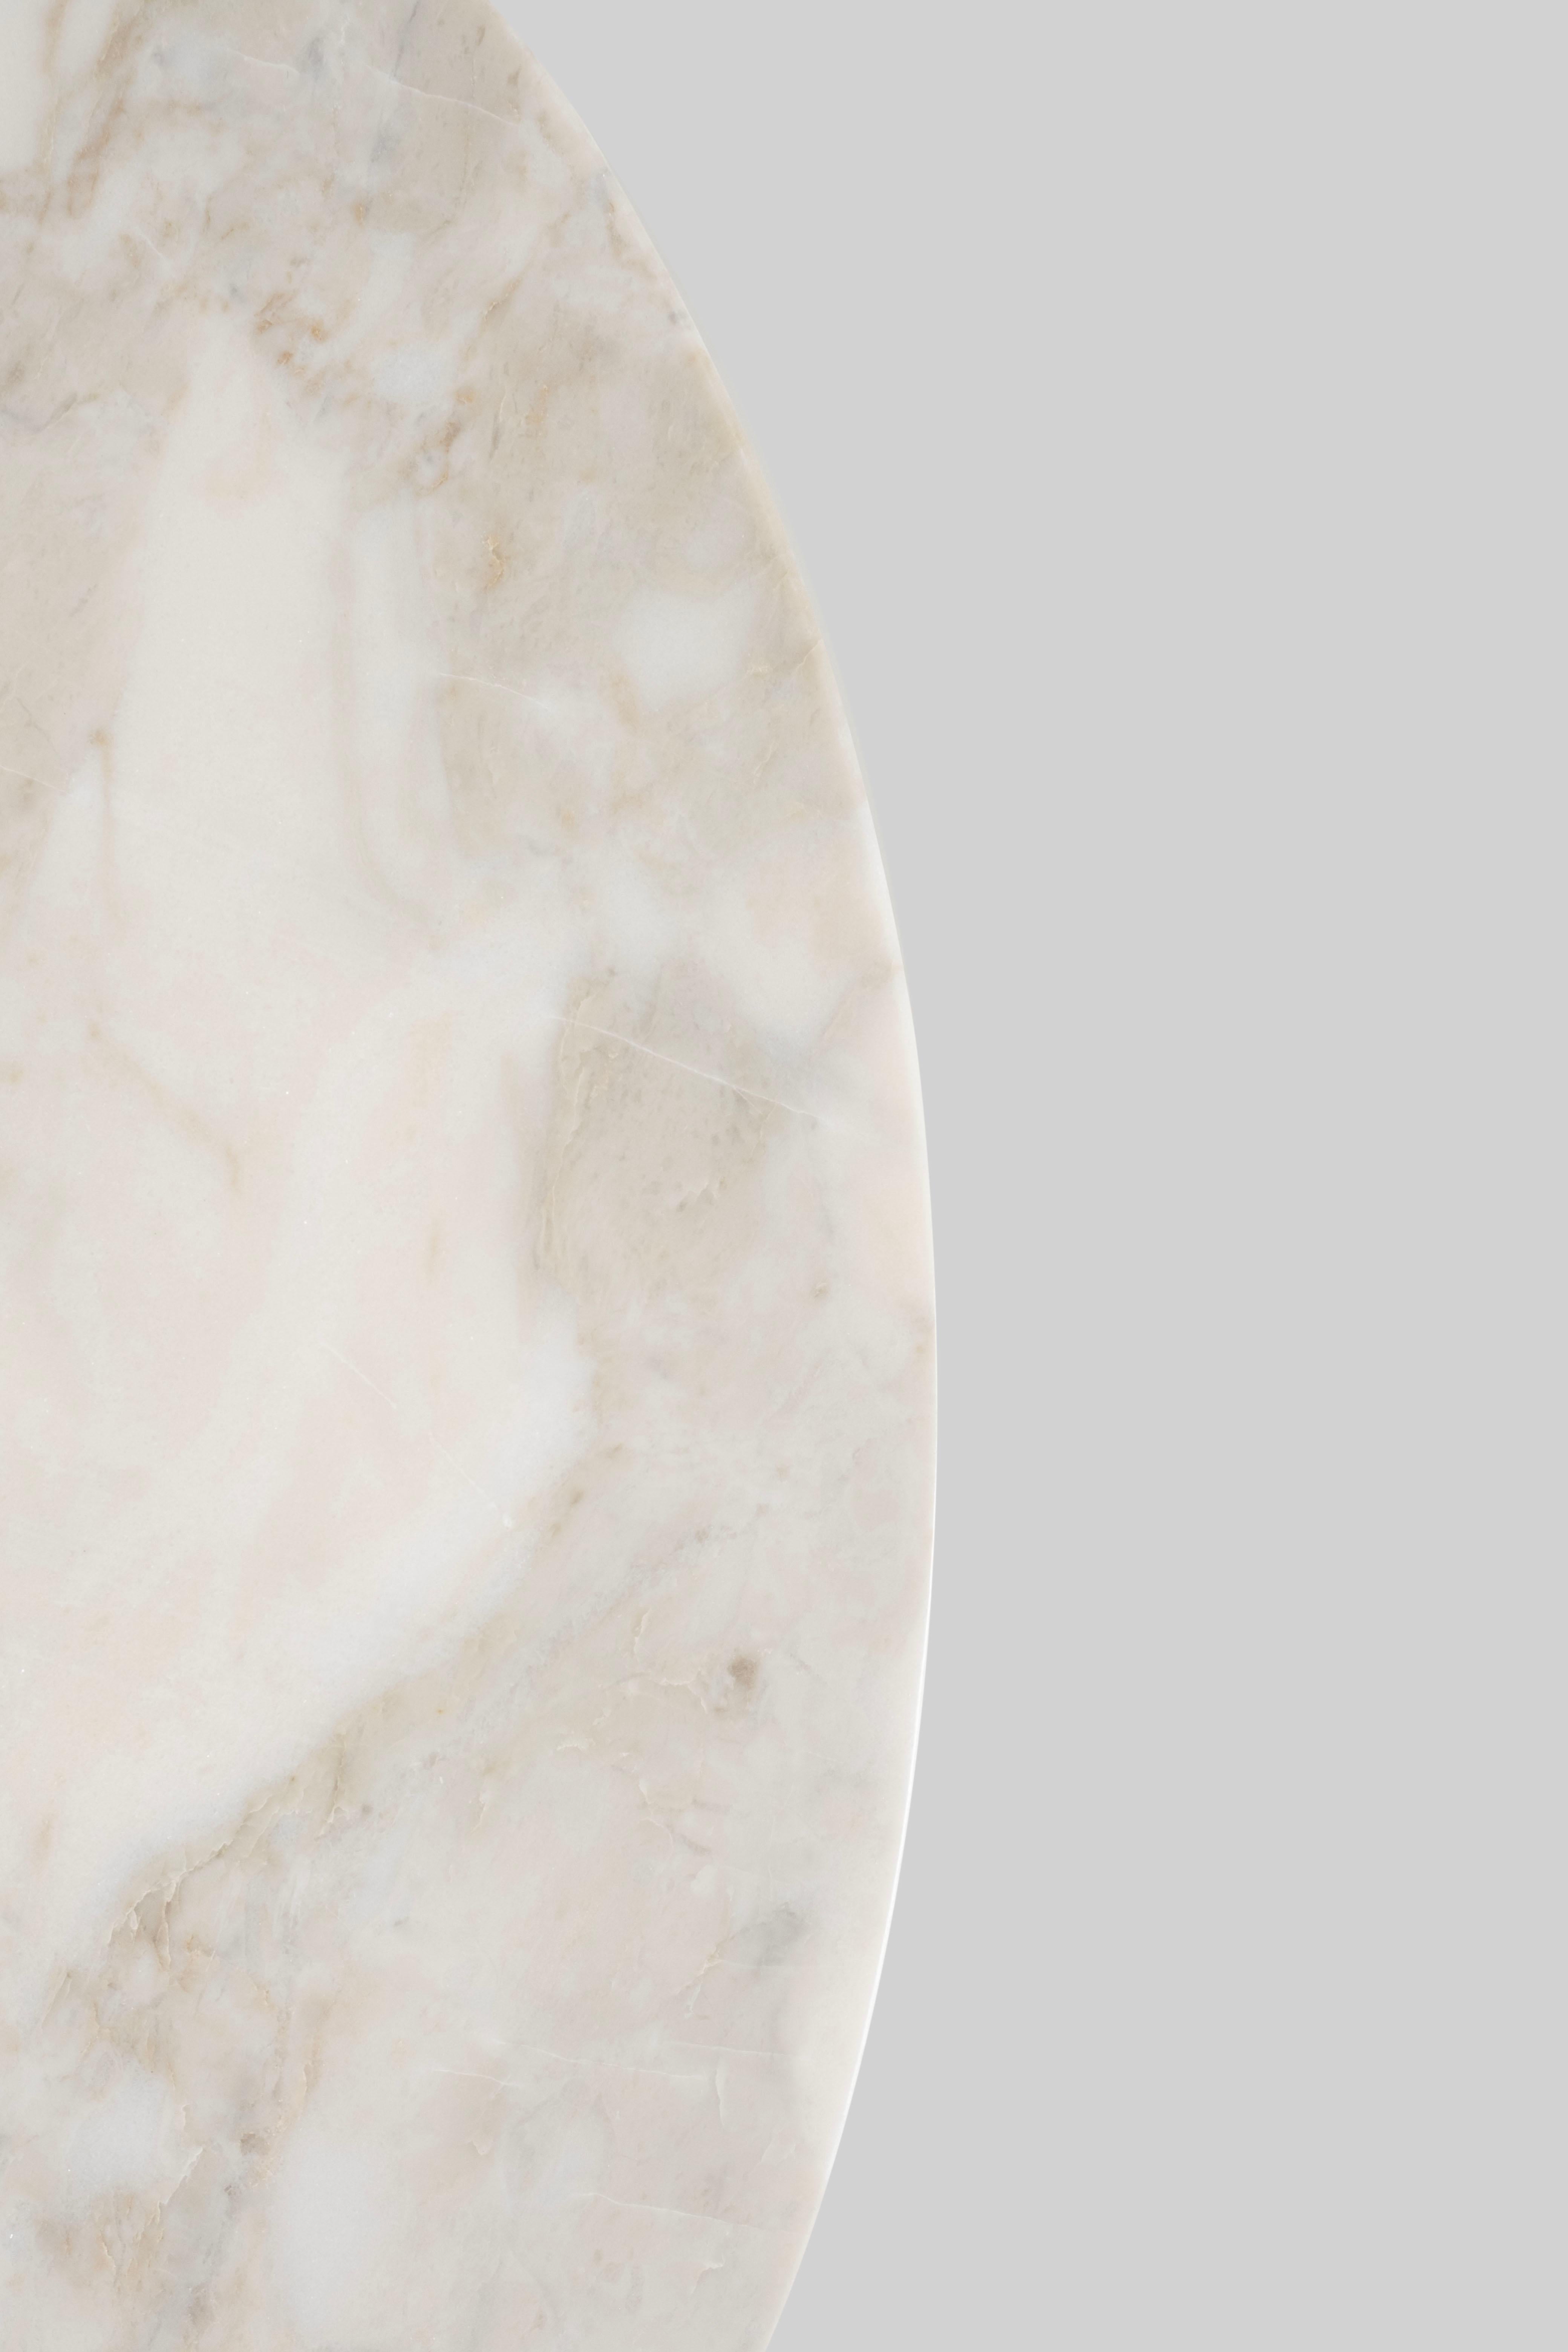 Modern Landscape Side Tables Calacatta Oro Marble Handmade Portugal Greenapple For Sale 8